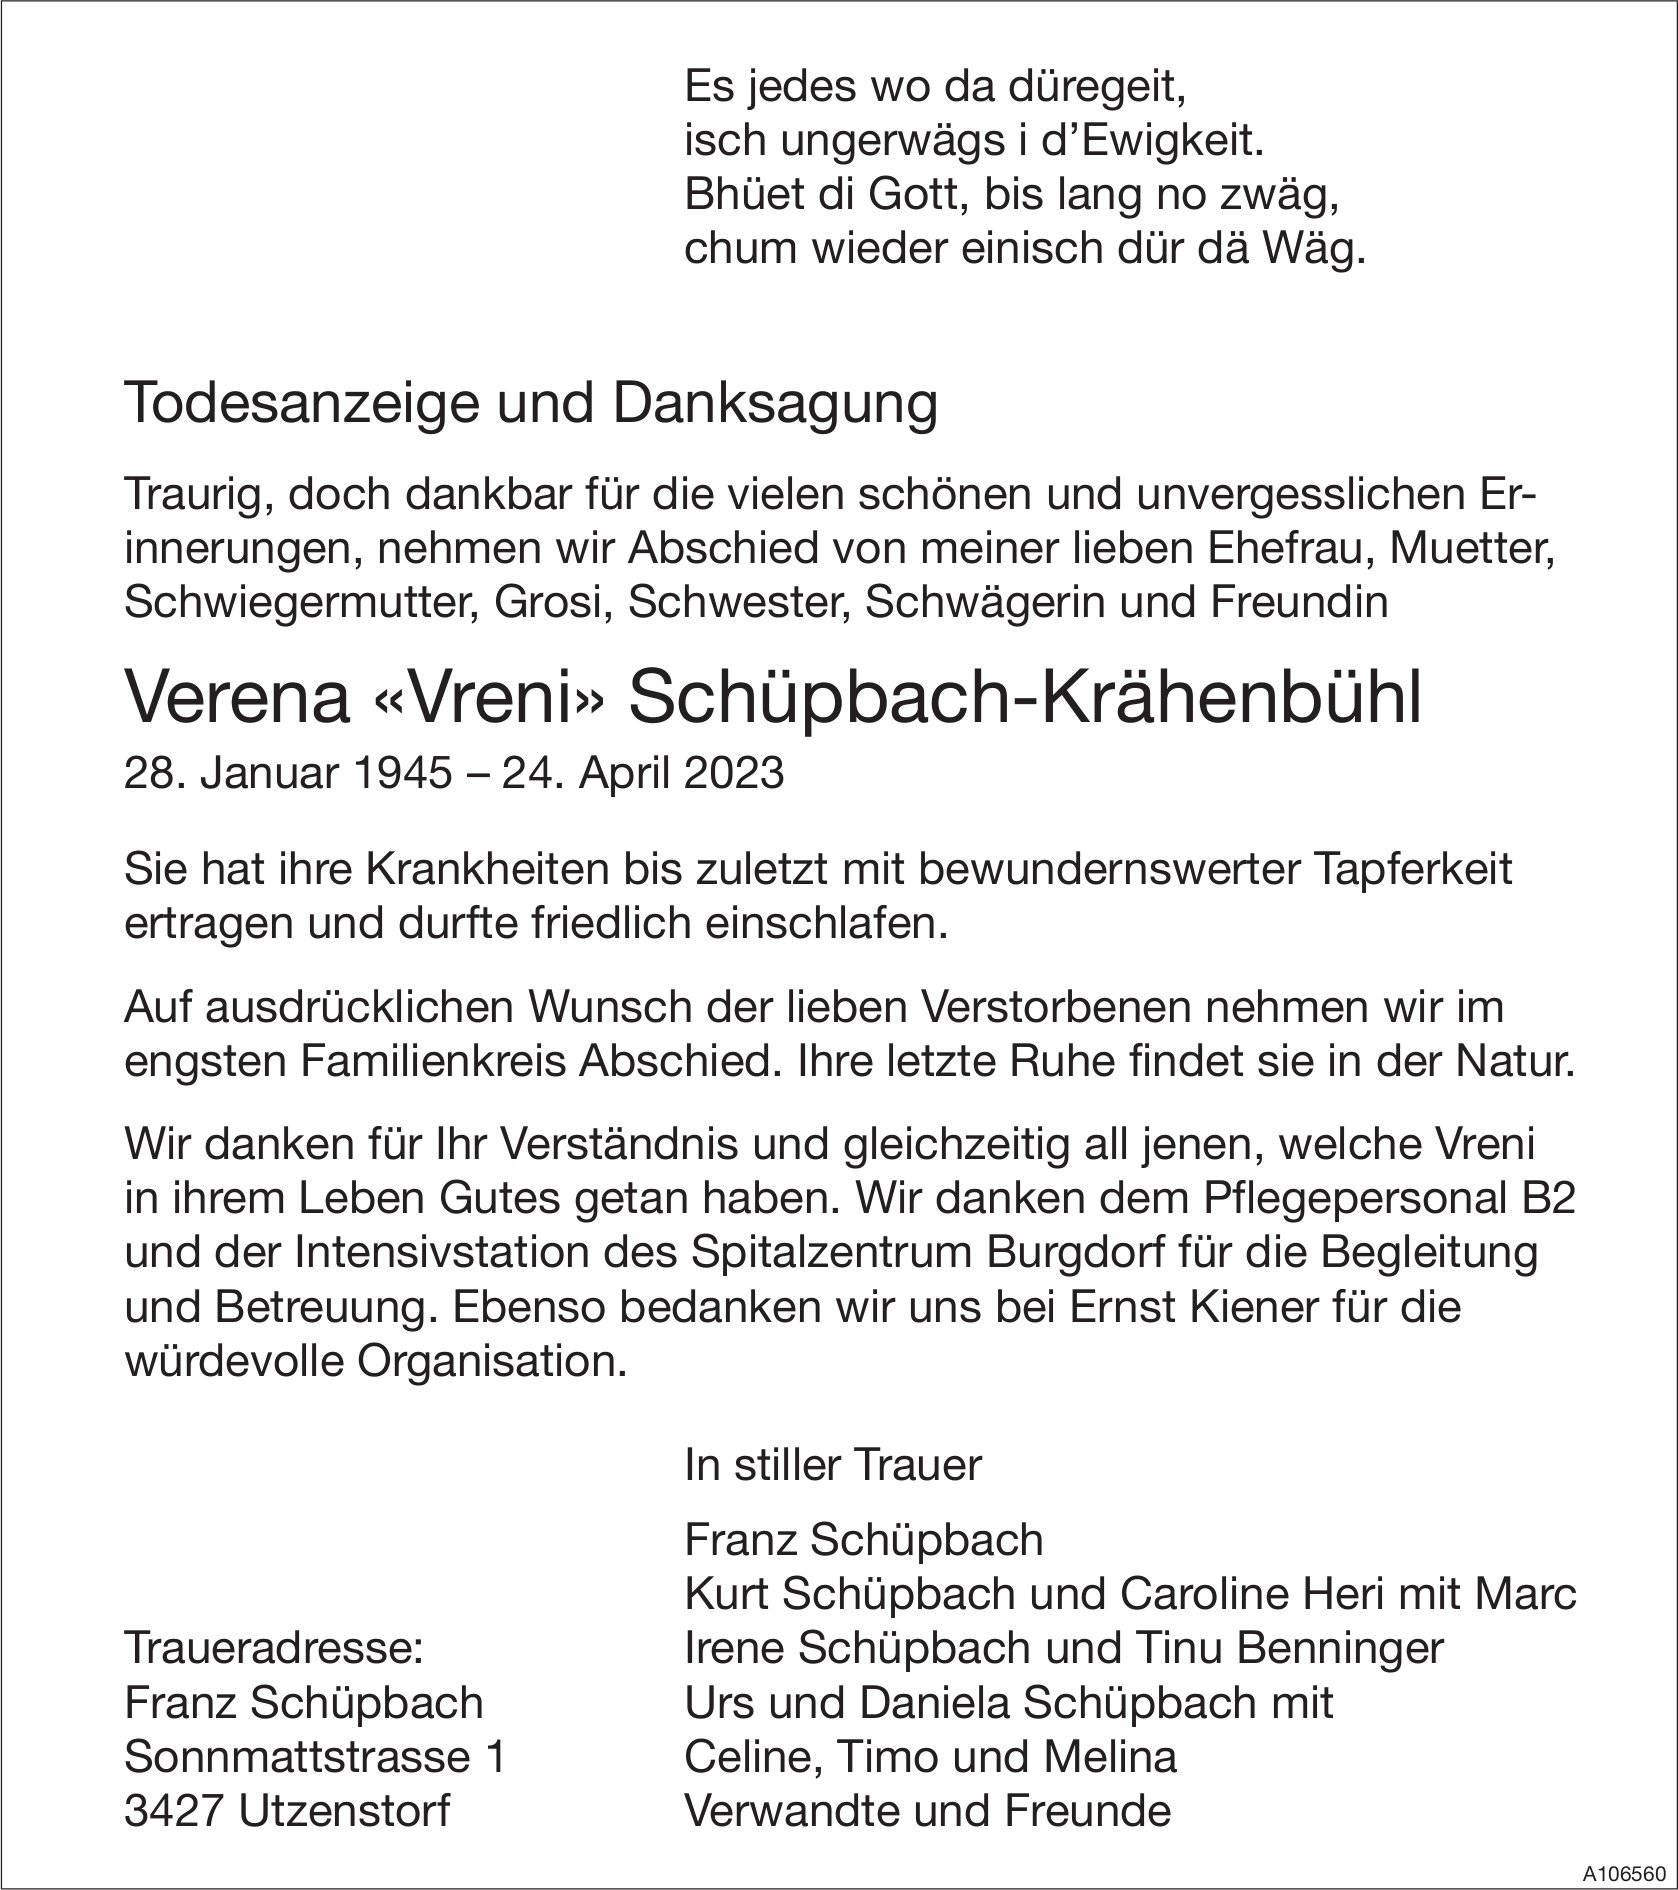 Verena «Vreni» Schüpbach-Krähenbühl, April 2023 / TA